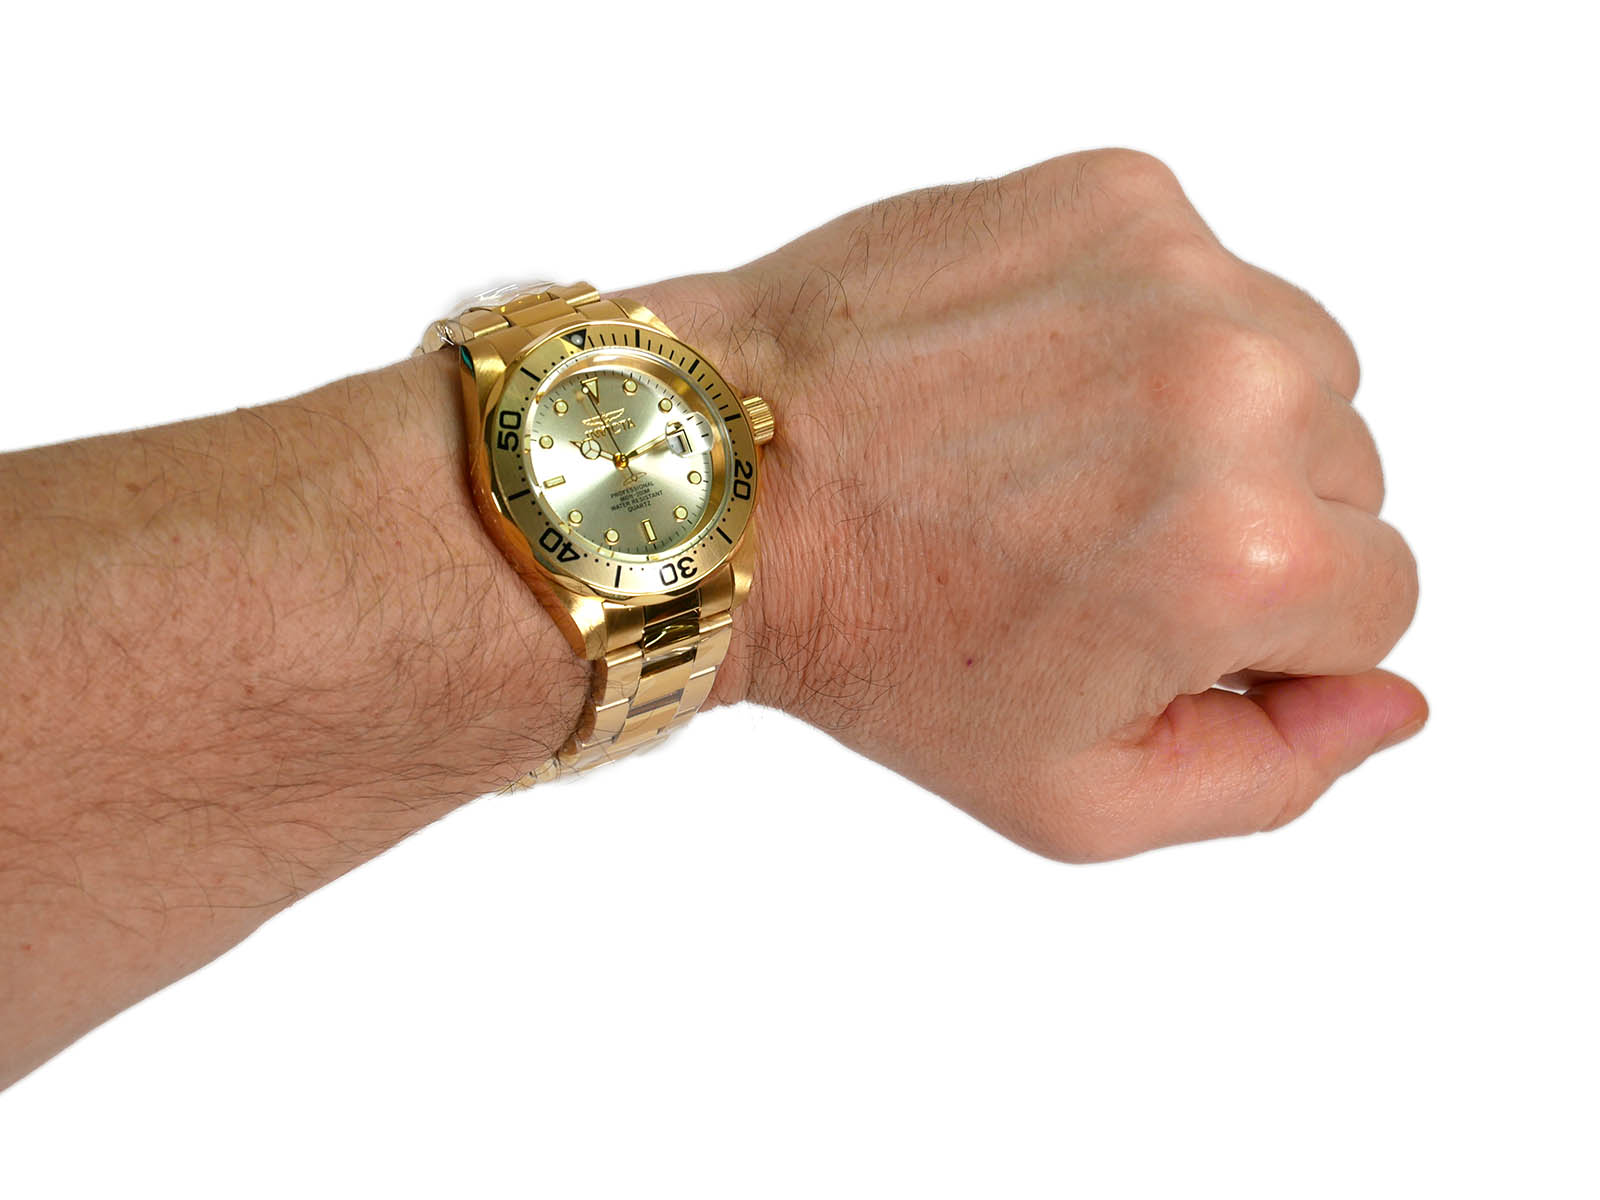 Invicta Men's 2155 Pro Diver Collection Gold-Tone Watch